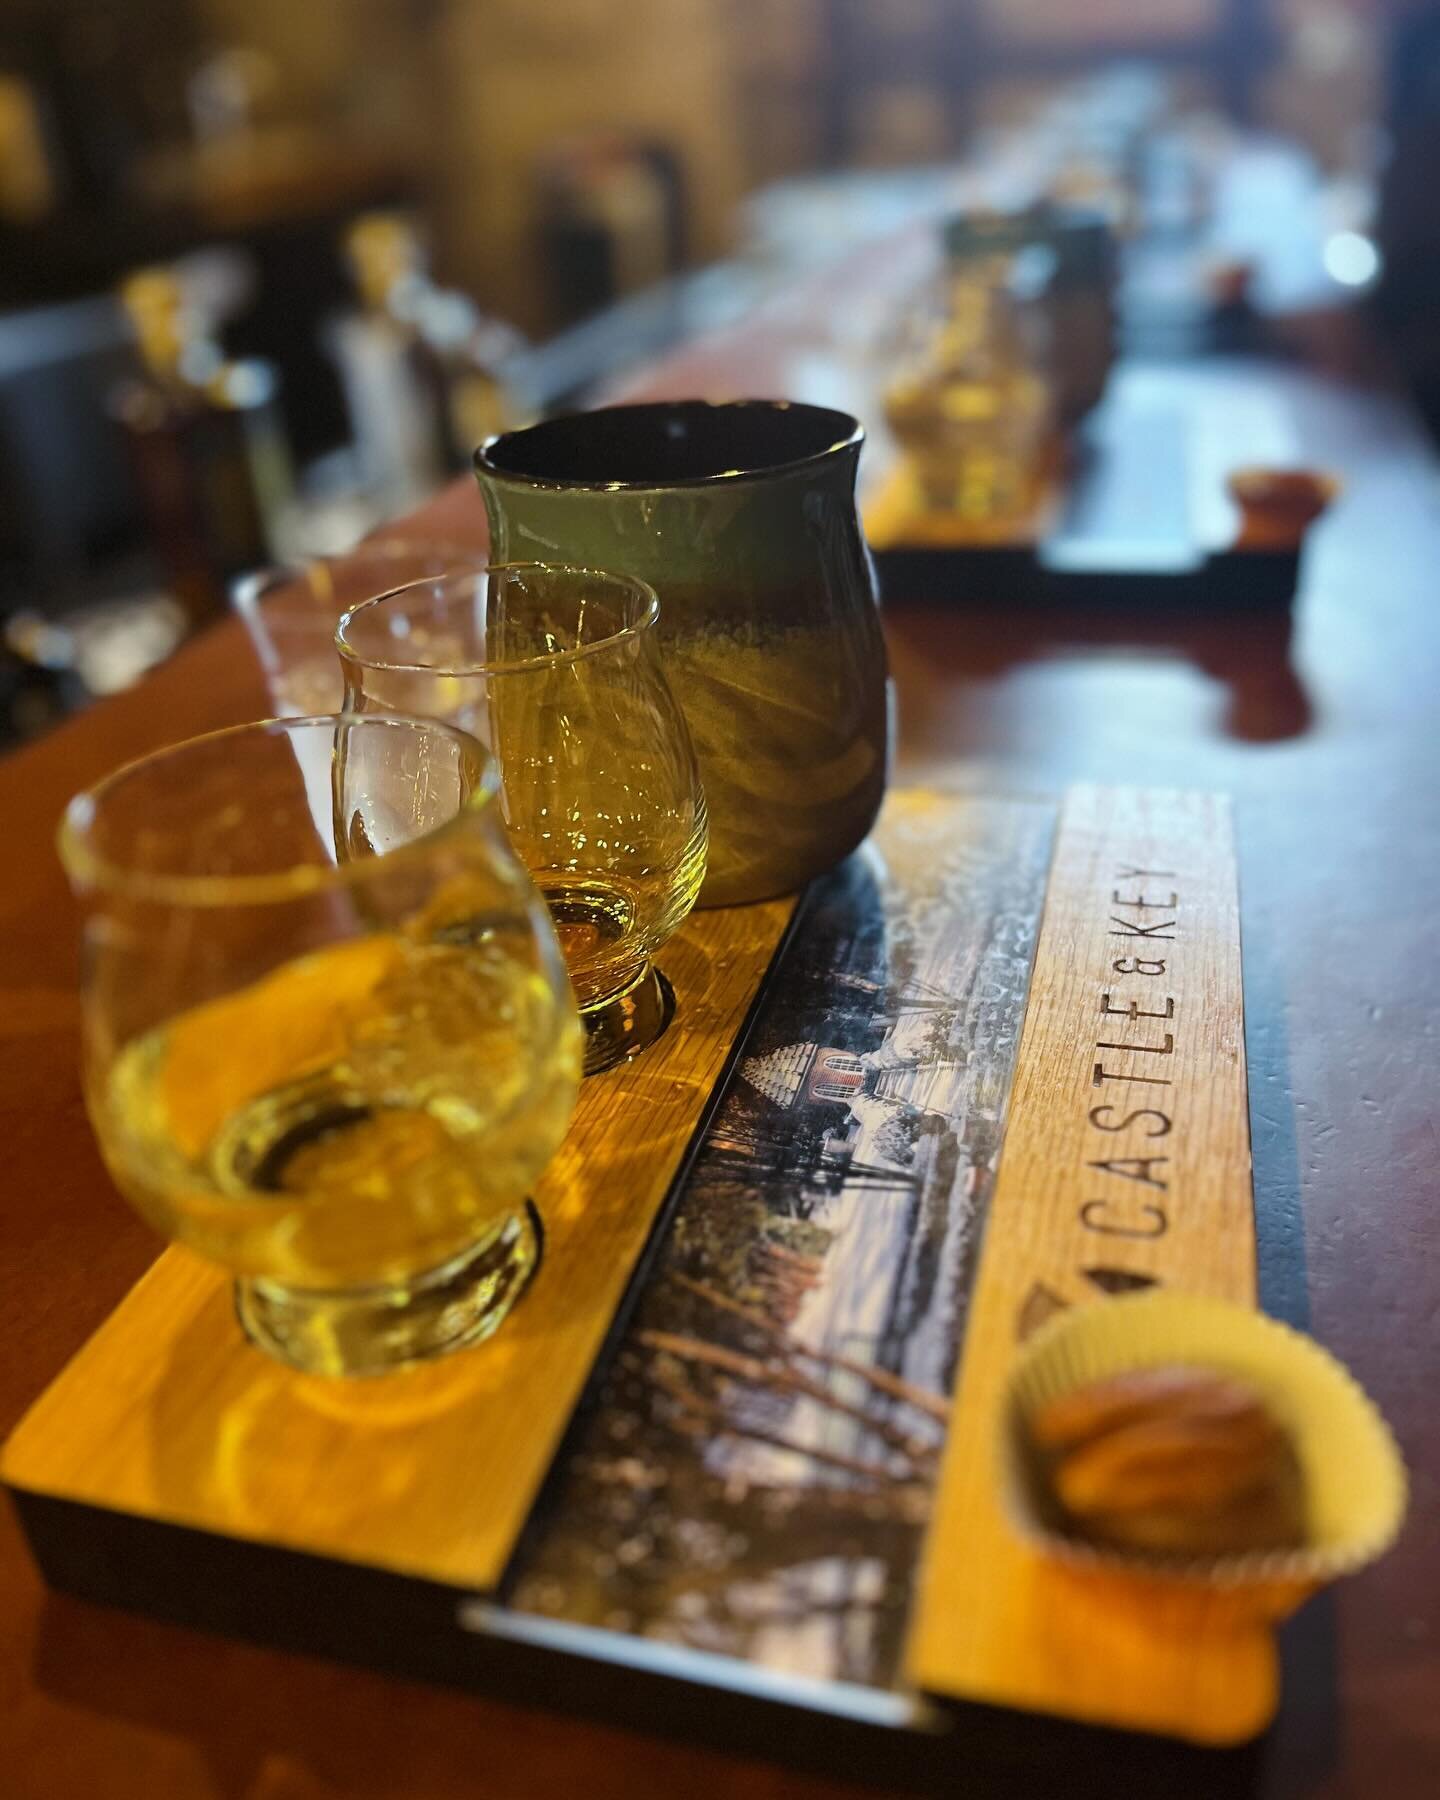 Wonderful tour and tasting at Castle and Key!
#kentuckybourbontrail #bourbon #bourbon-whiskey #liquidgold #bourbongram #whiskey #whisky #whiskeyandwatches #castleandkey